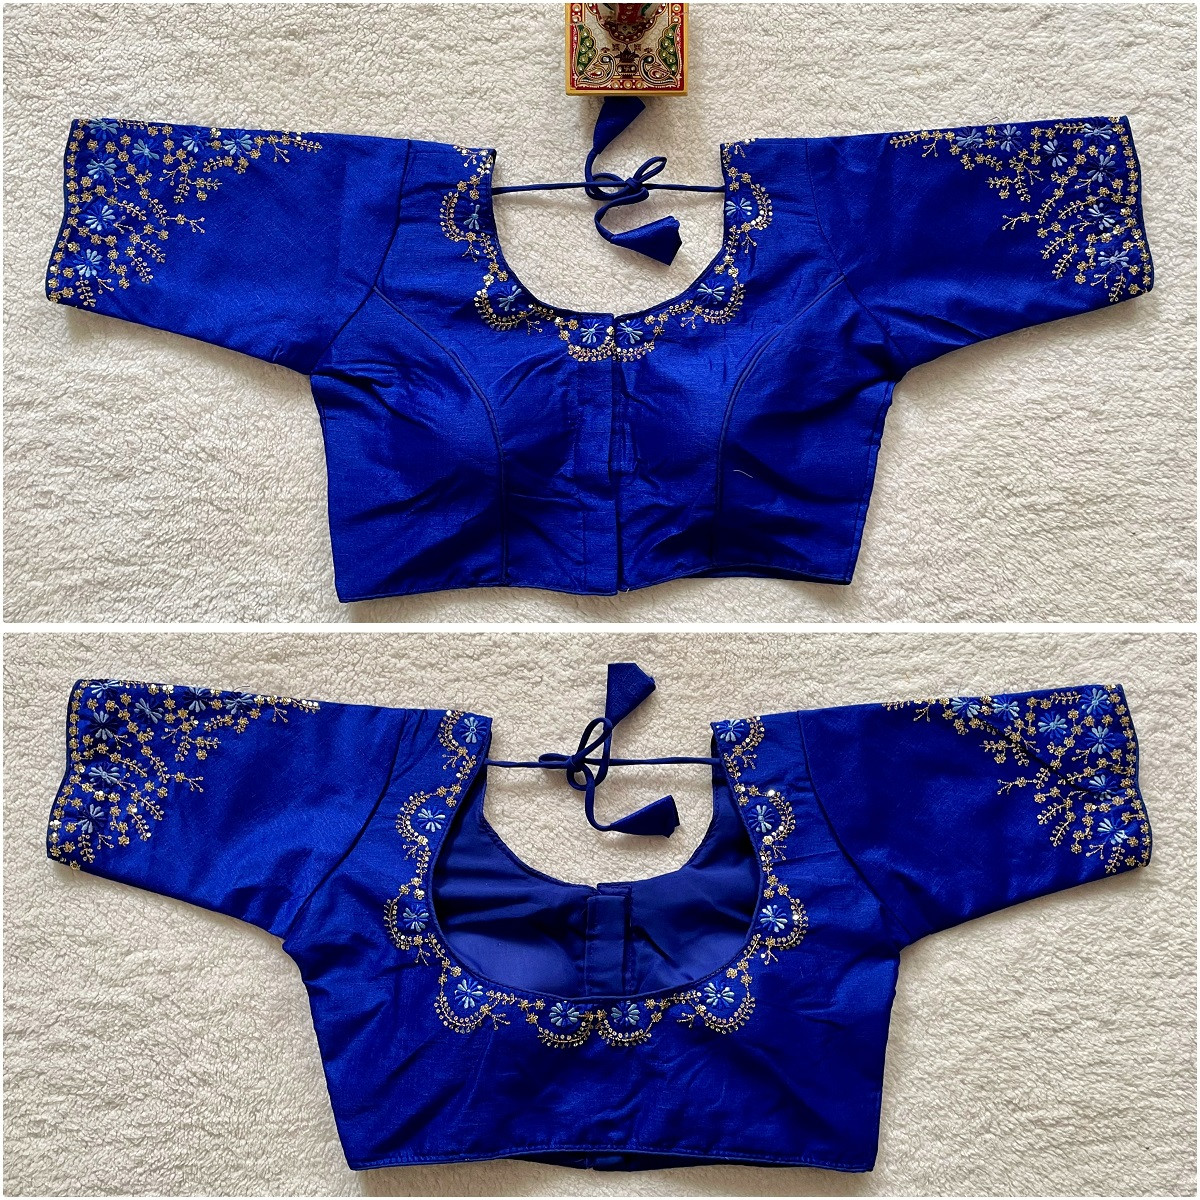 Phantom Silk Embroidered Designer Blouse - Royal Blue(S)